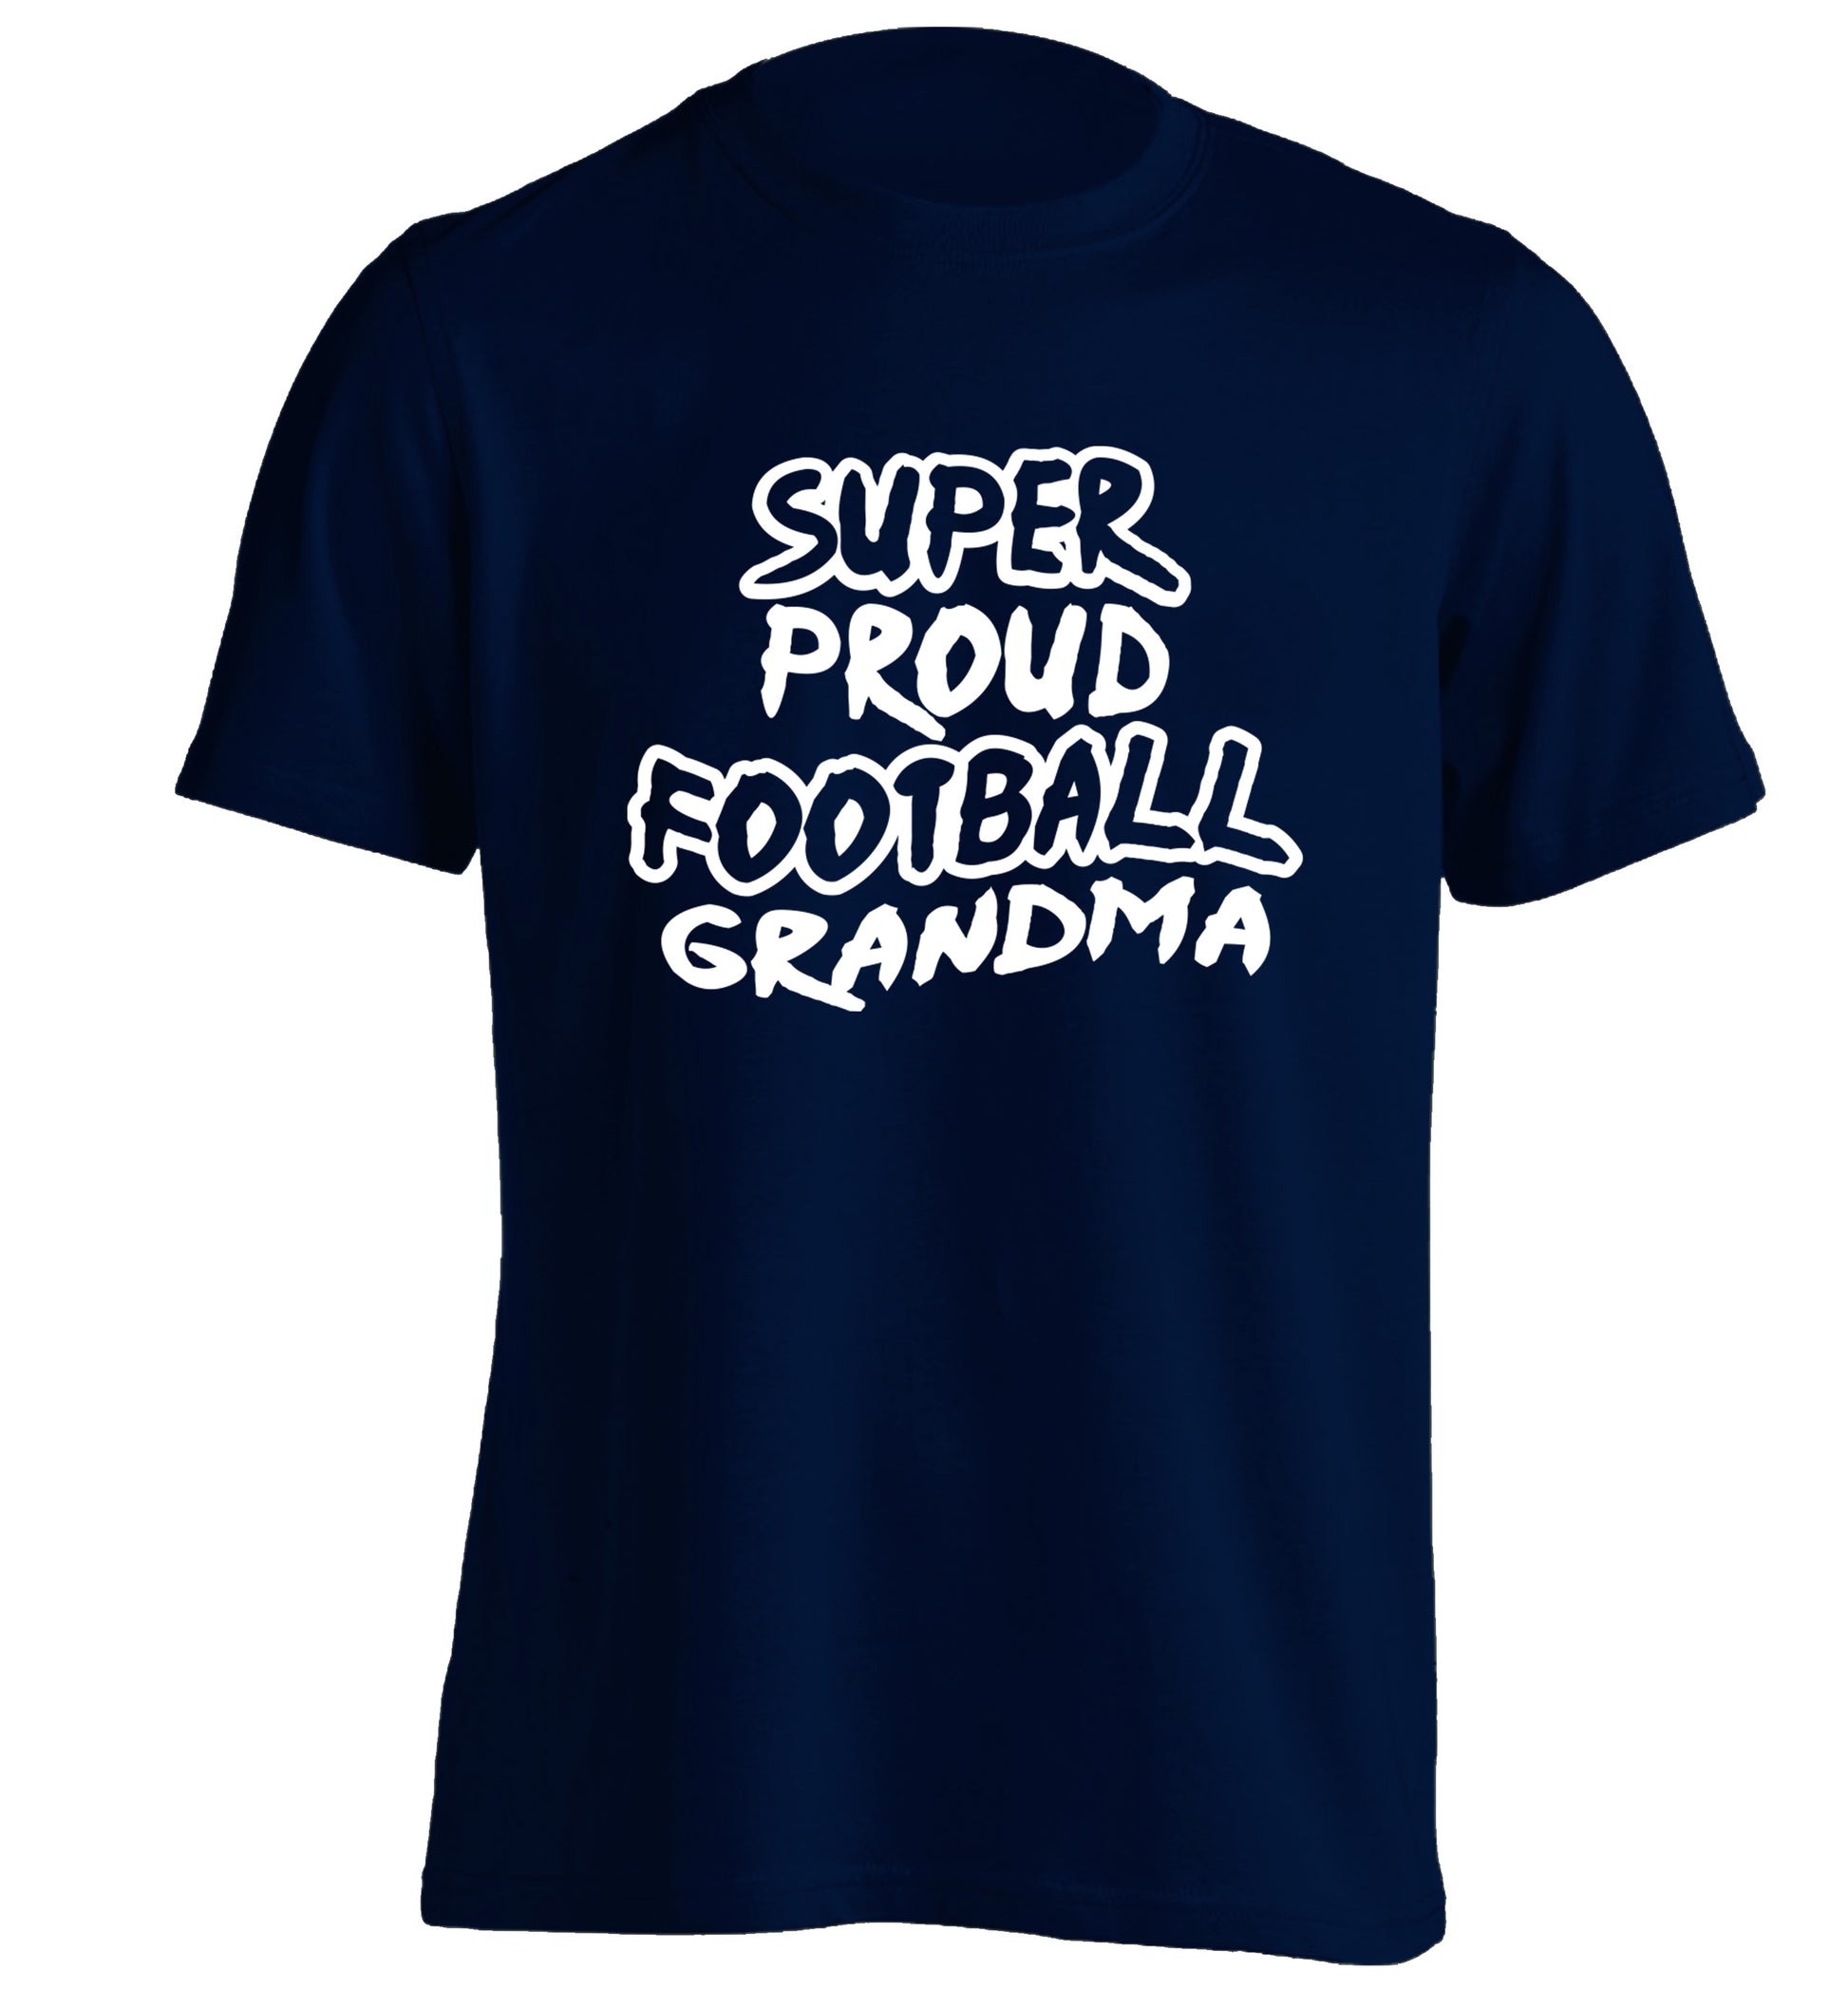 Super proud football grandma adults unisexnavy Tshirt 2XL